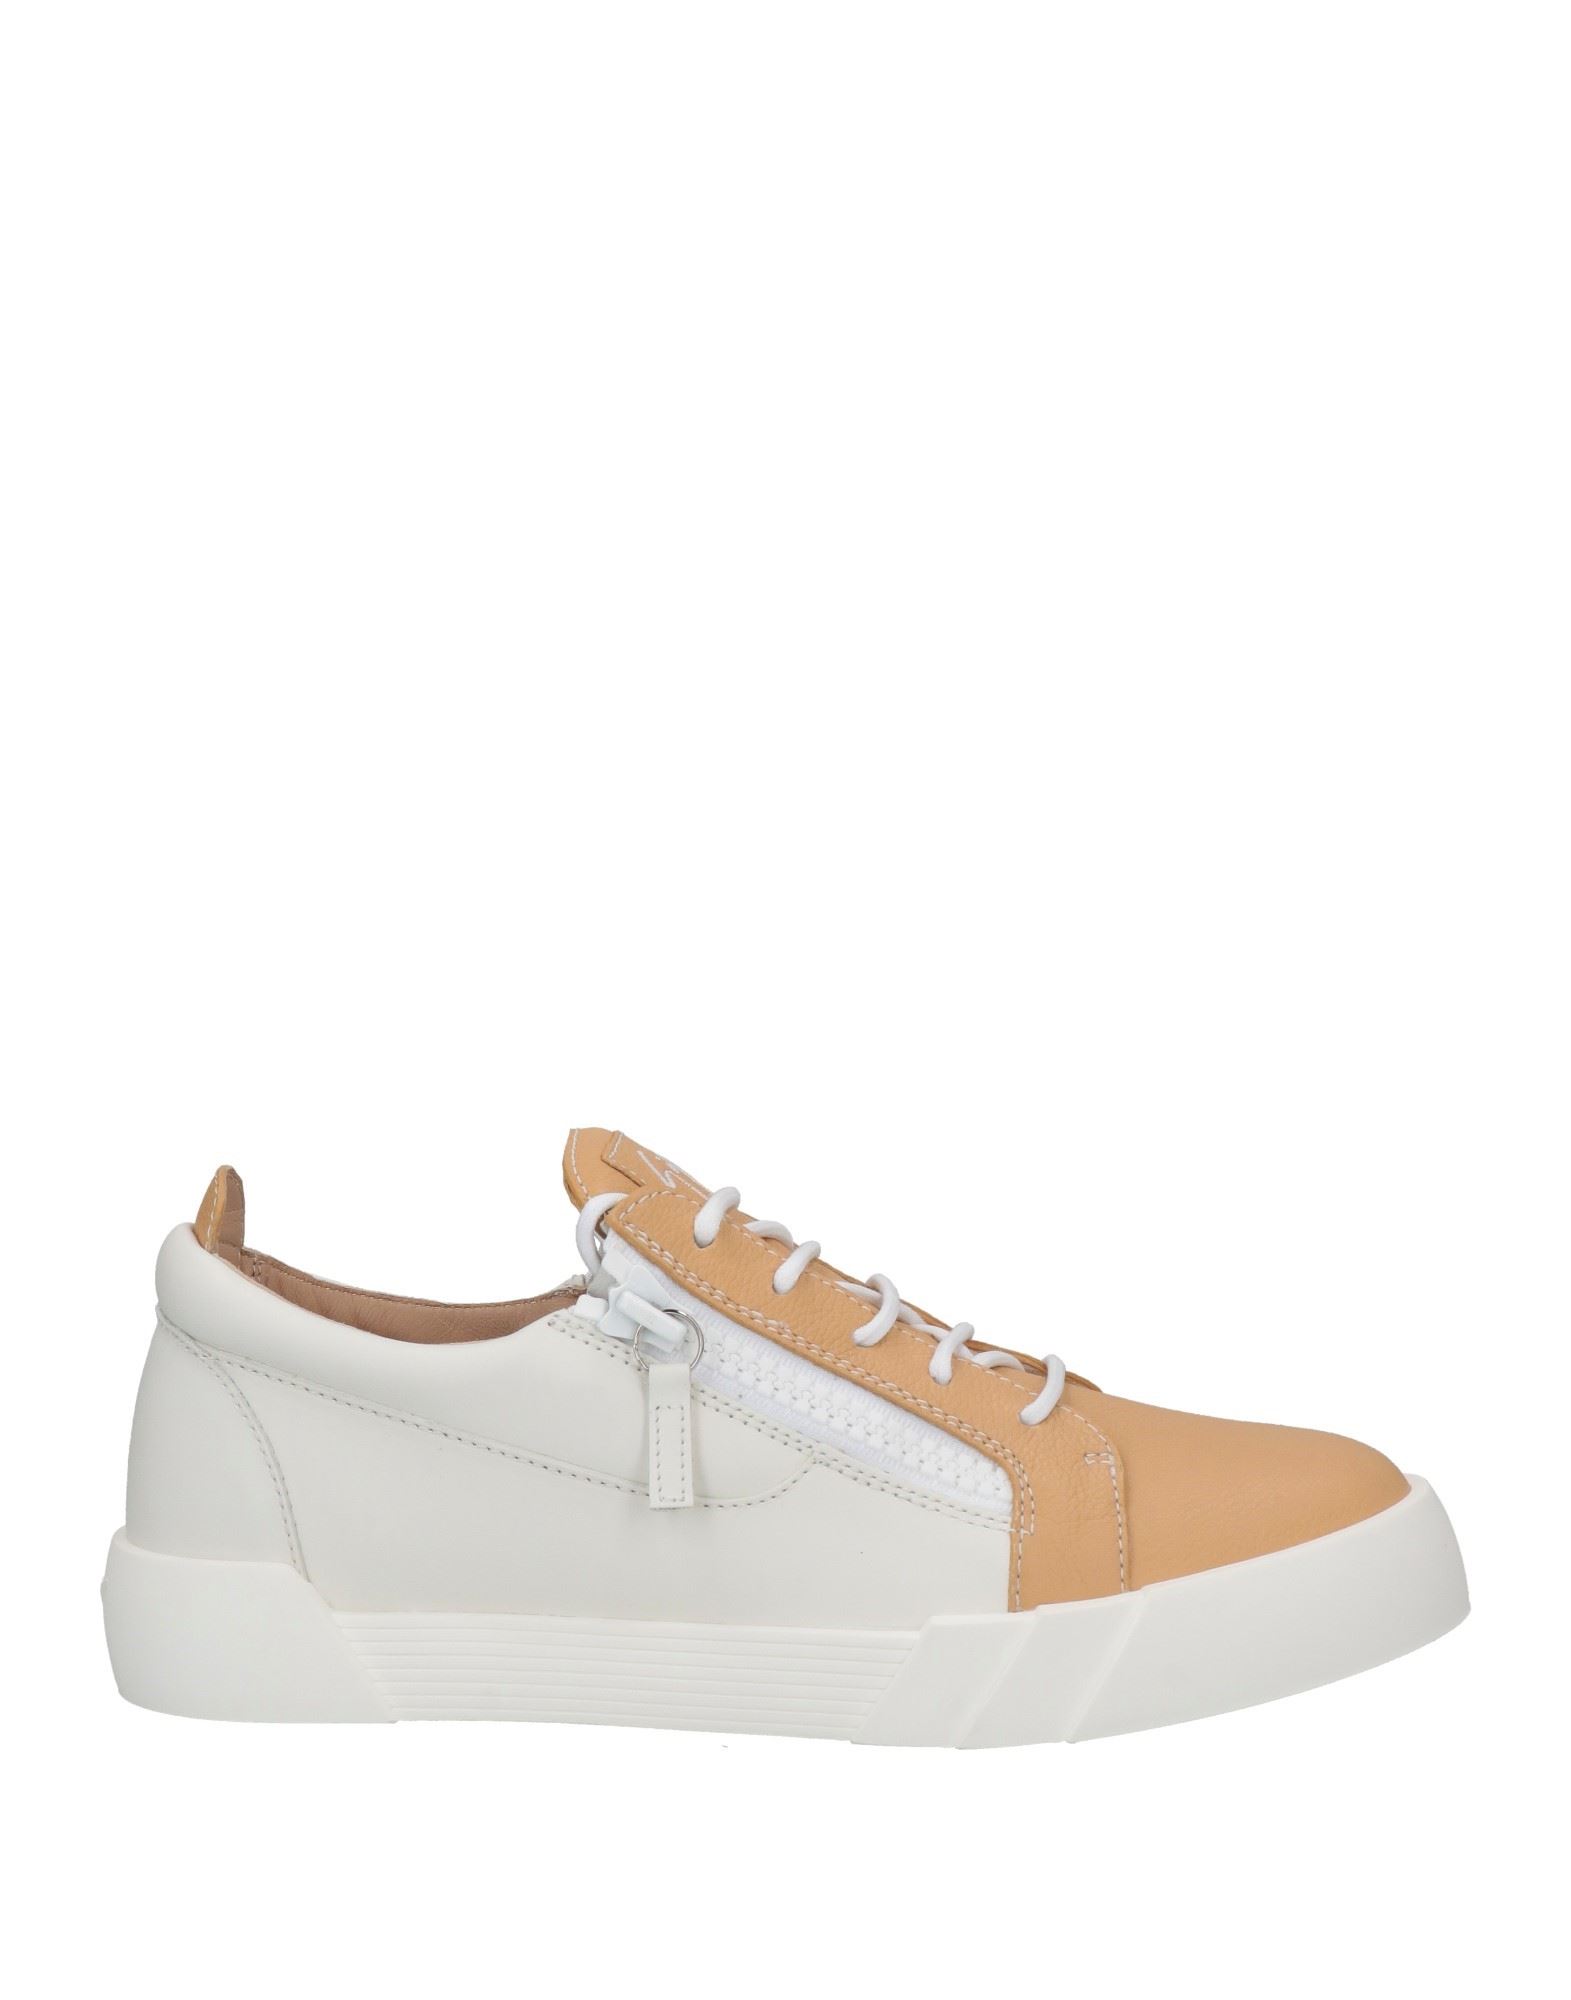 Shop Giuseppe Zanotti Man Sneakers White Size 7 Soft Leather